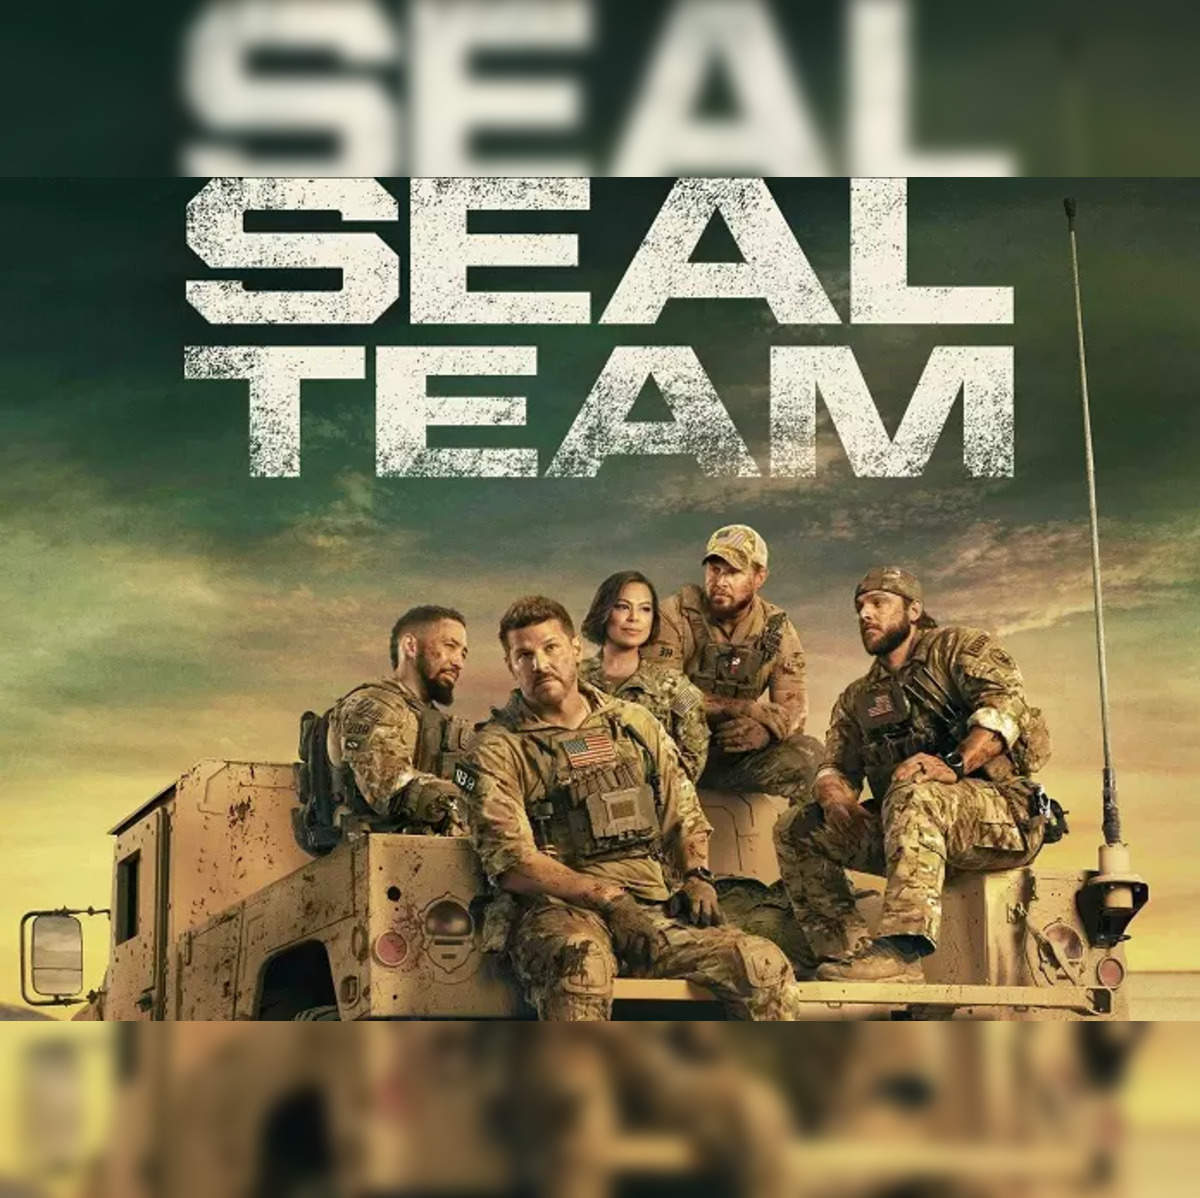 Prime Video: SEAL TEAM - Season 5